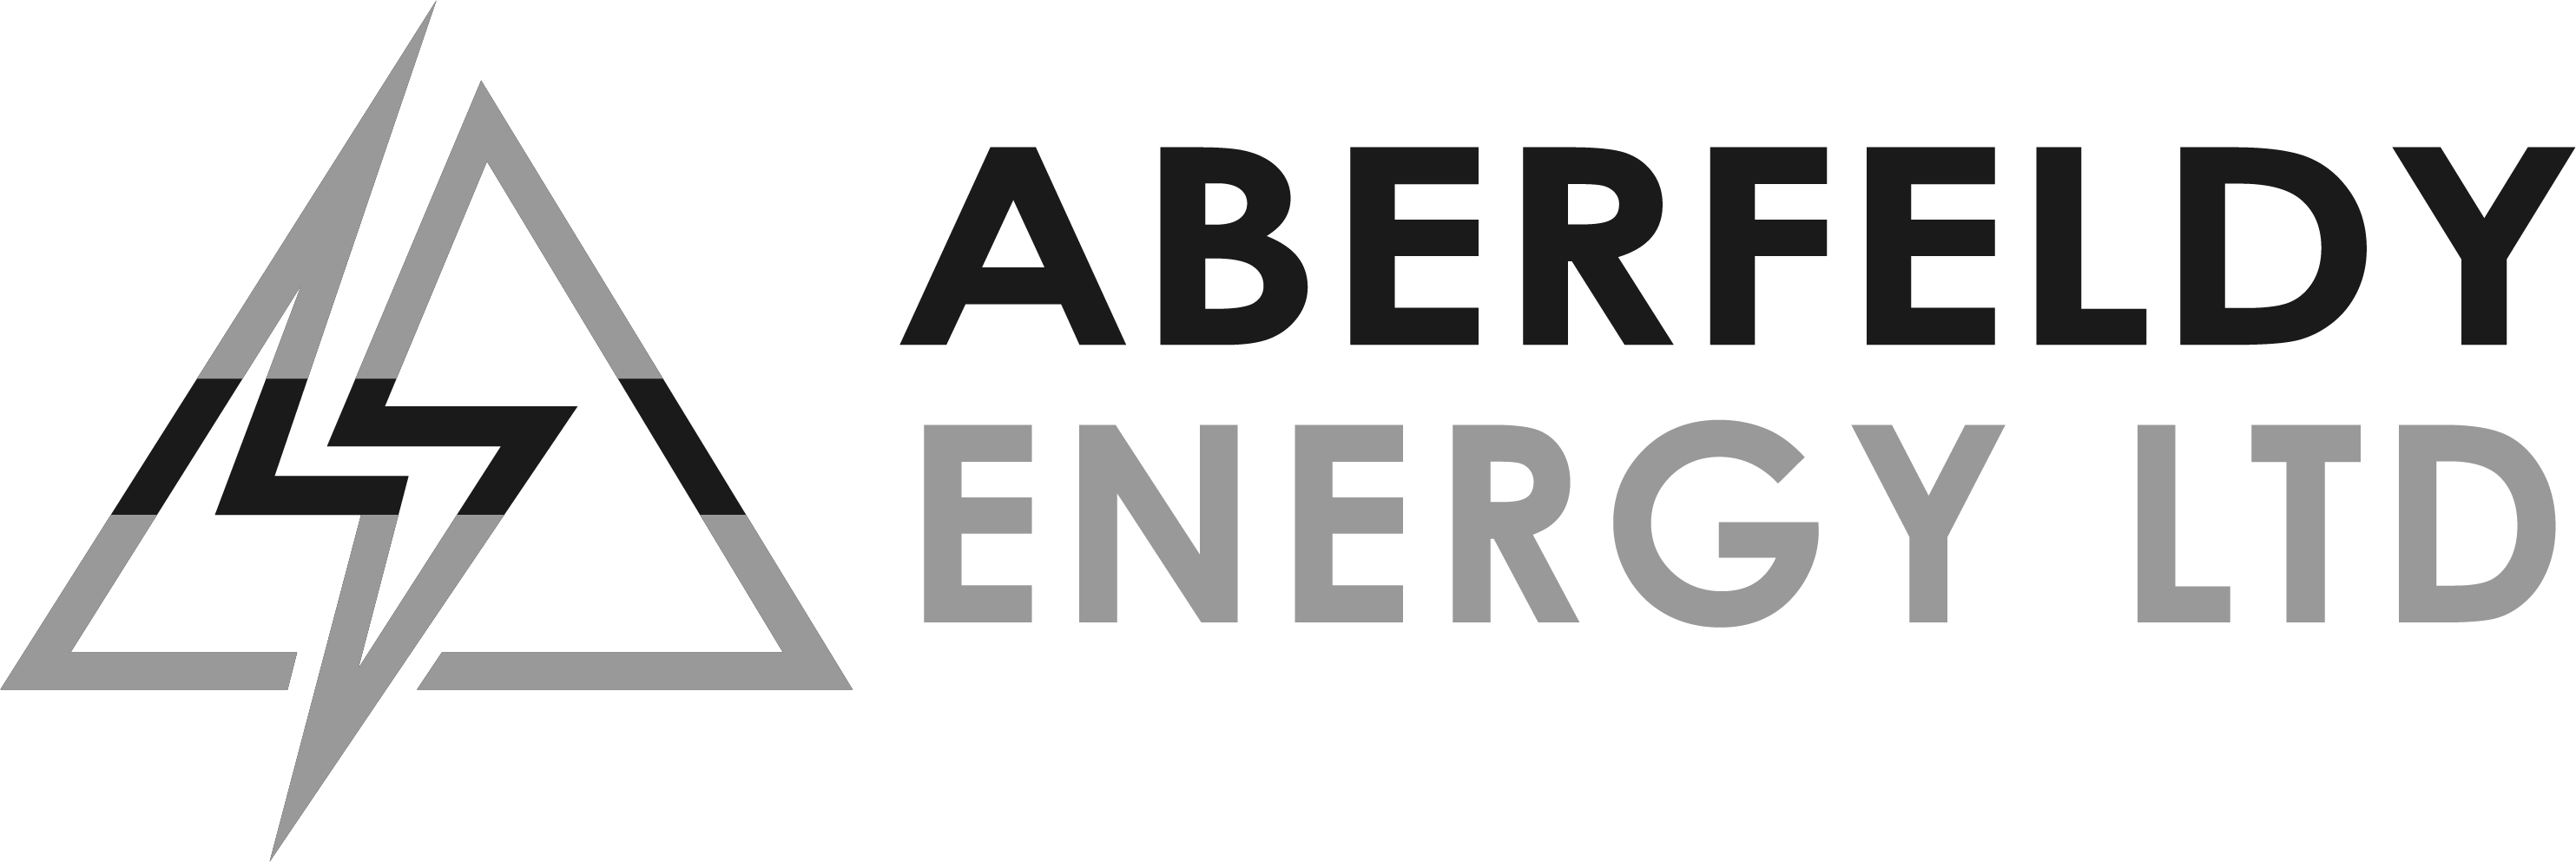 Aberfeldy Energy Limited logo